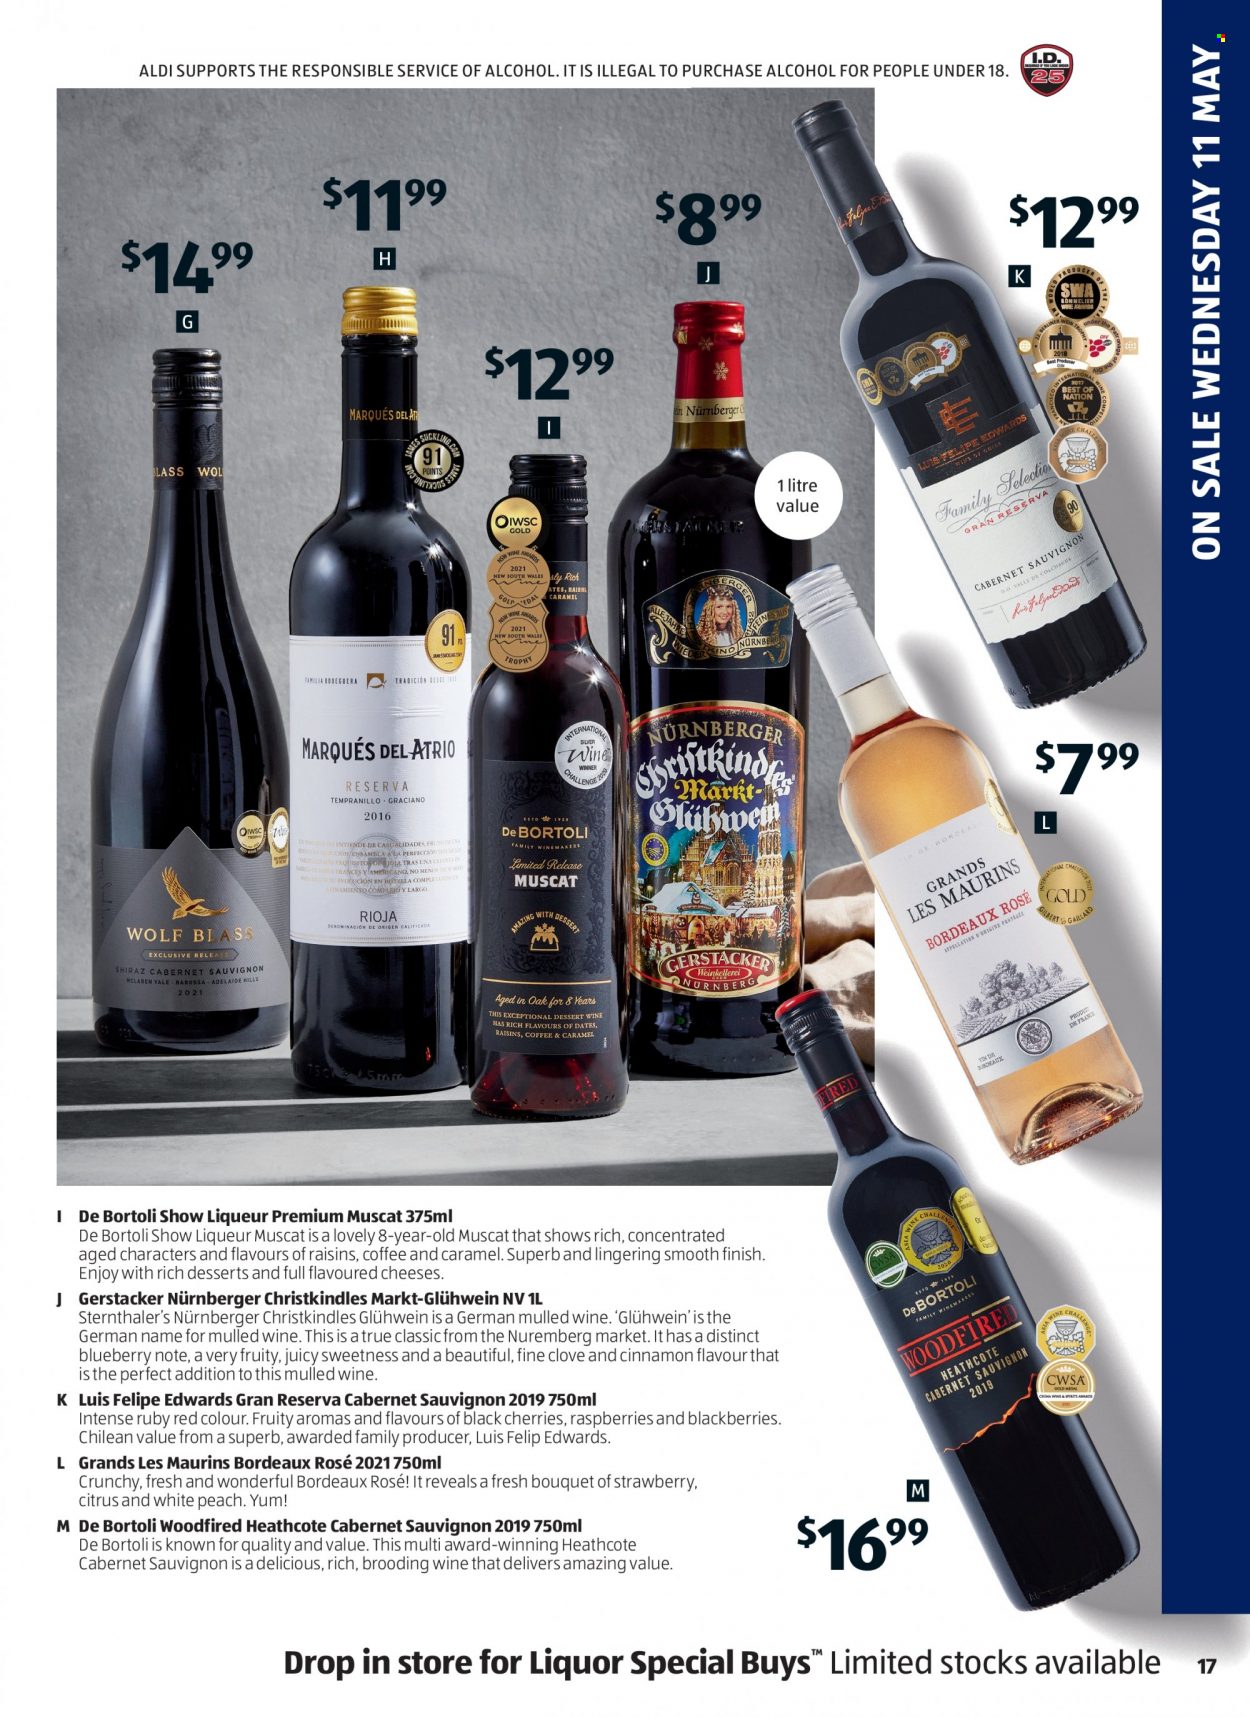 ALDI Catalogue - 12 May 2022 - 18 May 2022 - Sales products - cheese, cloves, cinnamon, raisins, dried fruit, coffee, Cabernet Sauvignon, rosé wine, liqueur, liquor, bouquet. Page 17.